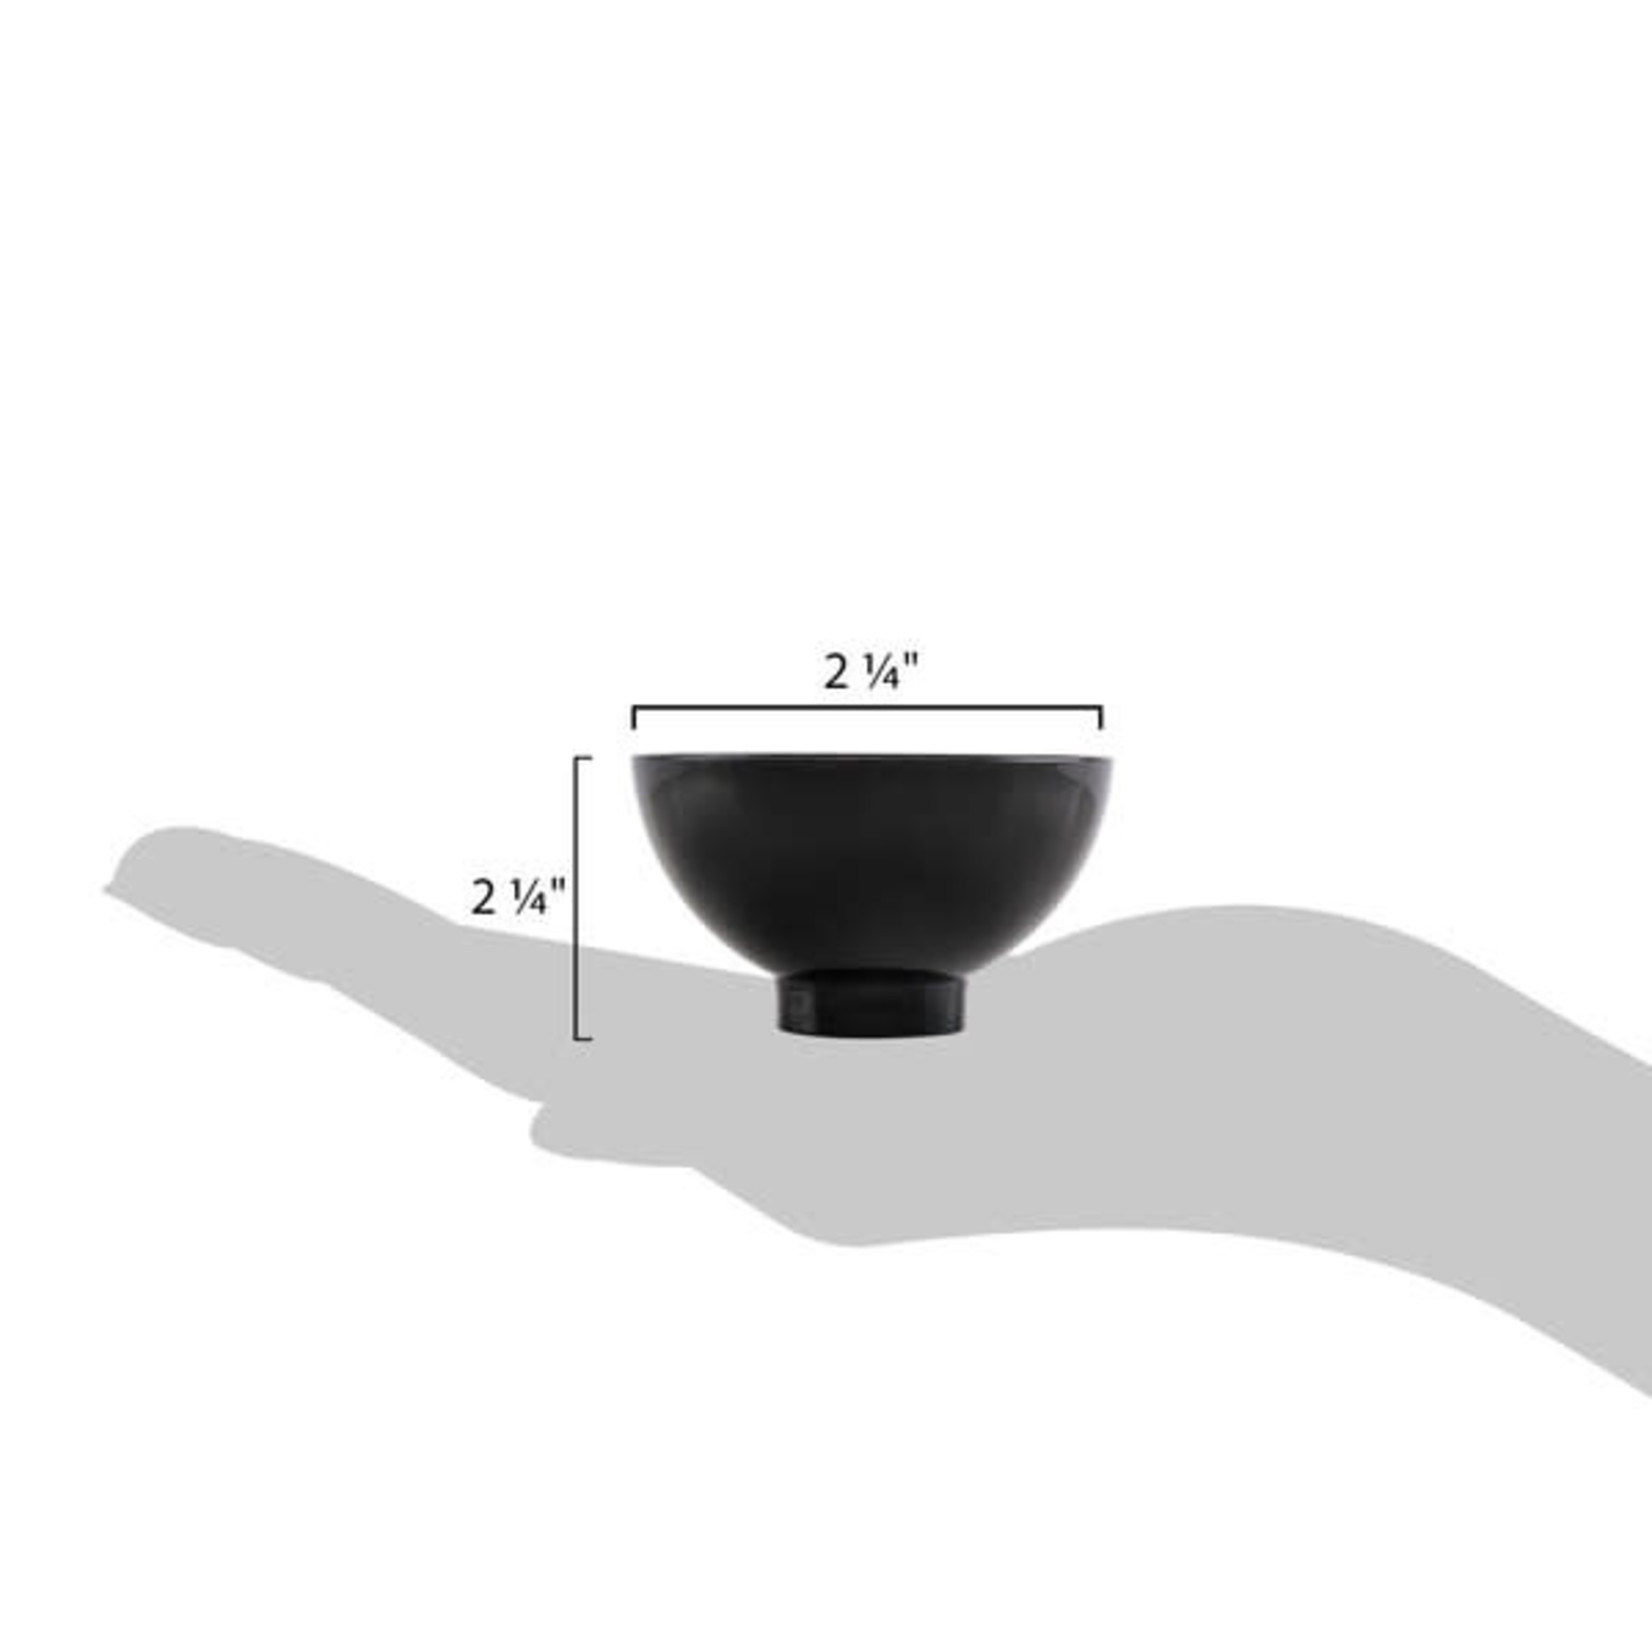 Webstaurant Black Plastic Tiny Bowl - 2 oz - 10/Pack